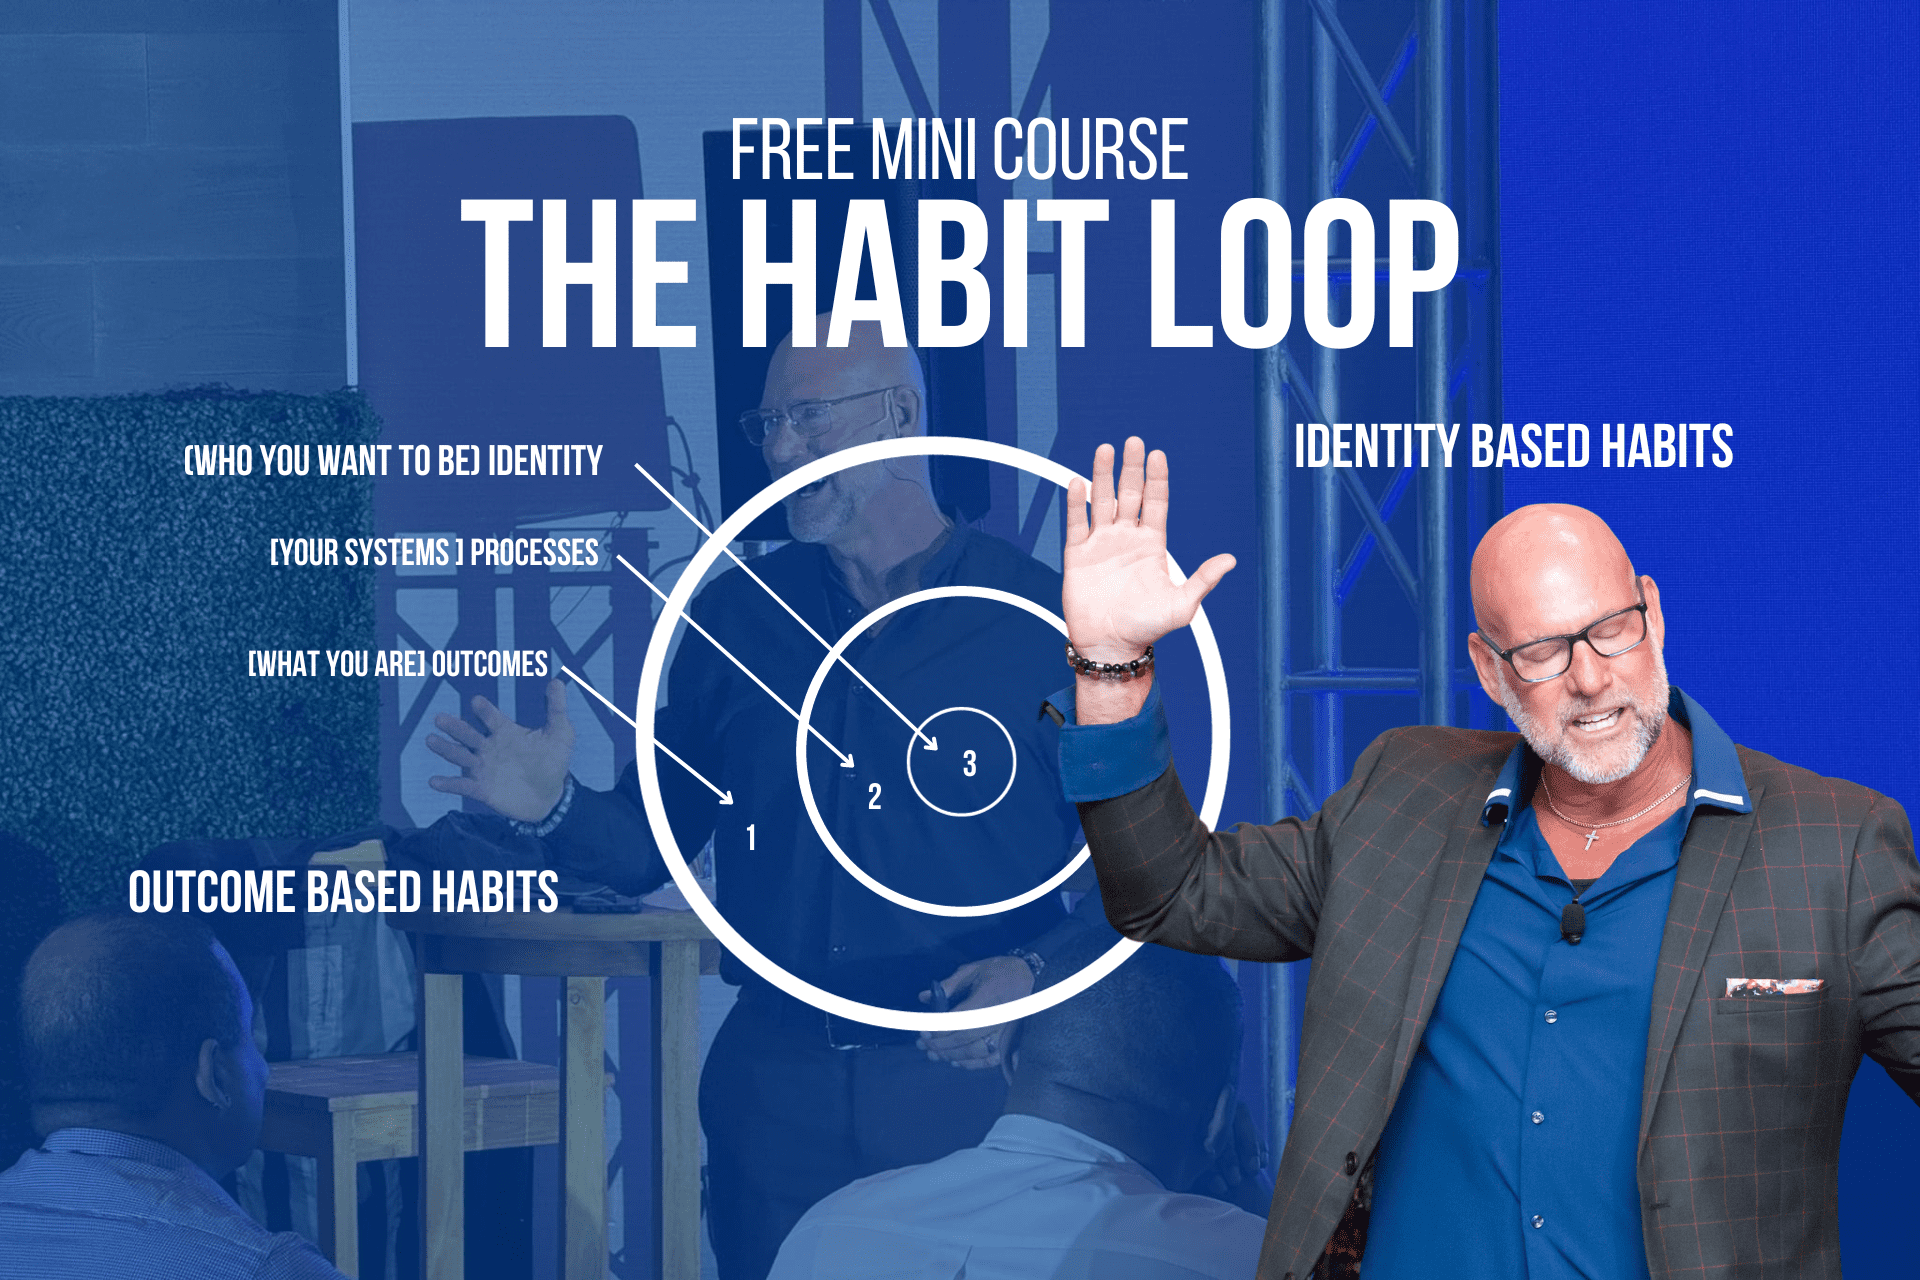 FREE Mini Course: The Habit Loop